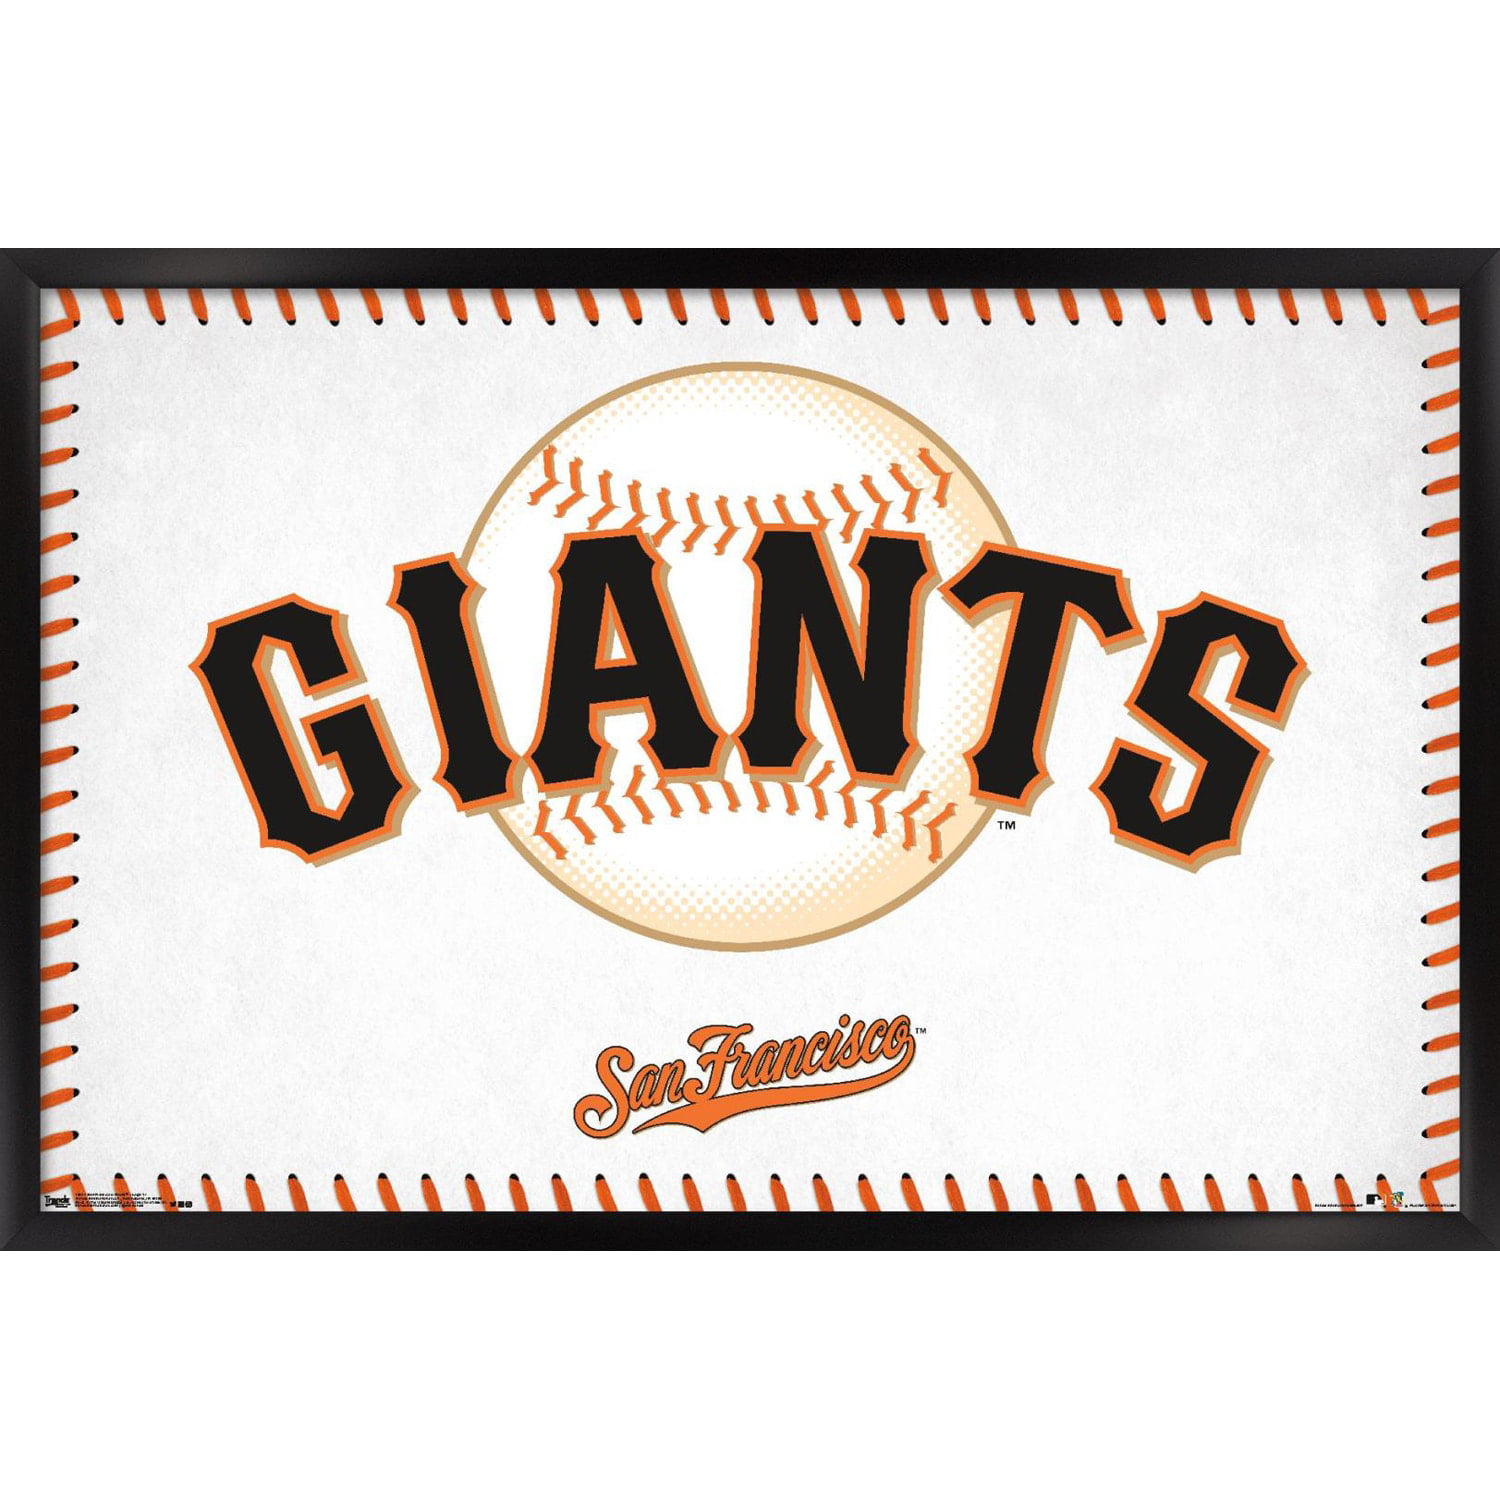 Pin on Giants Baseball